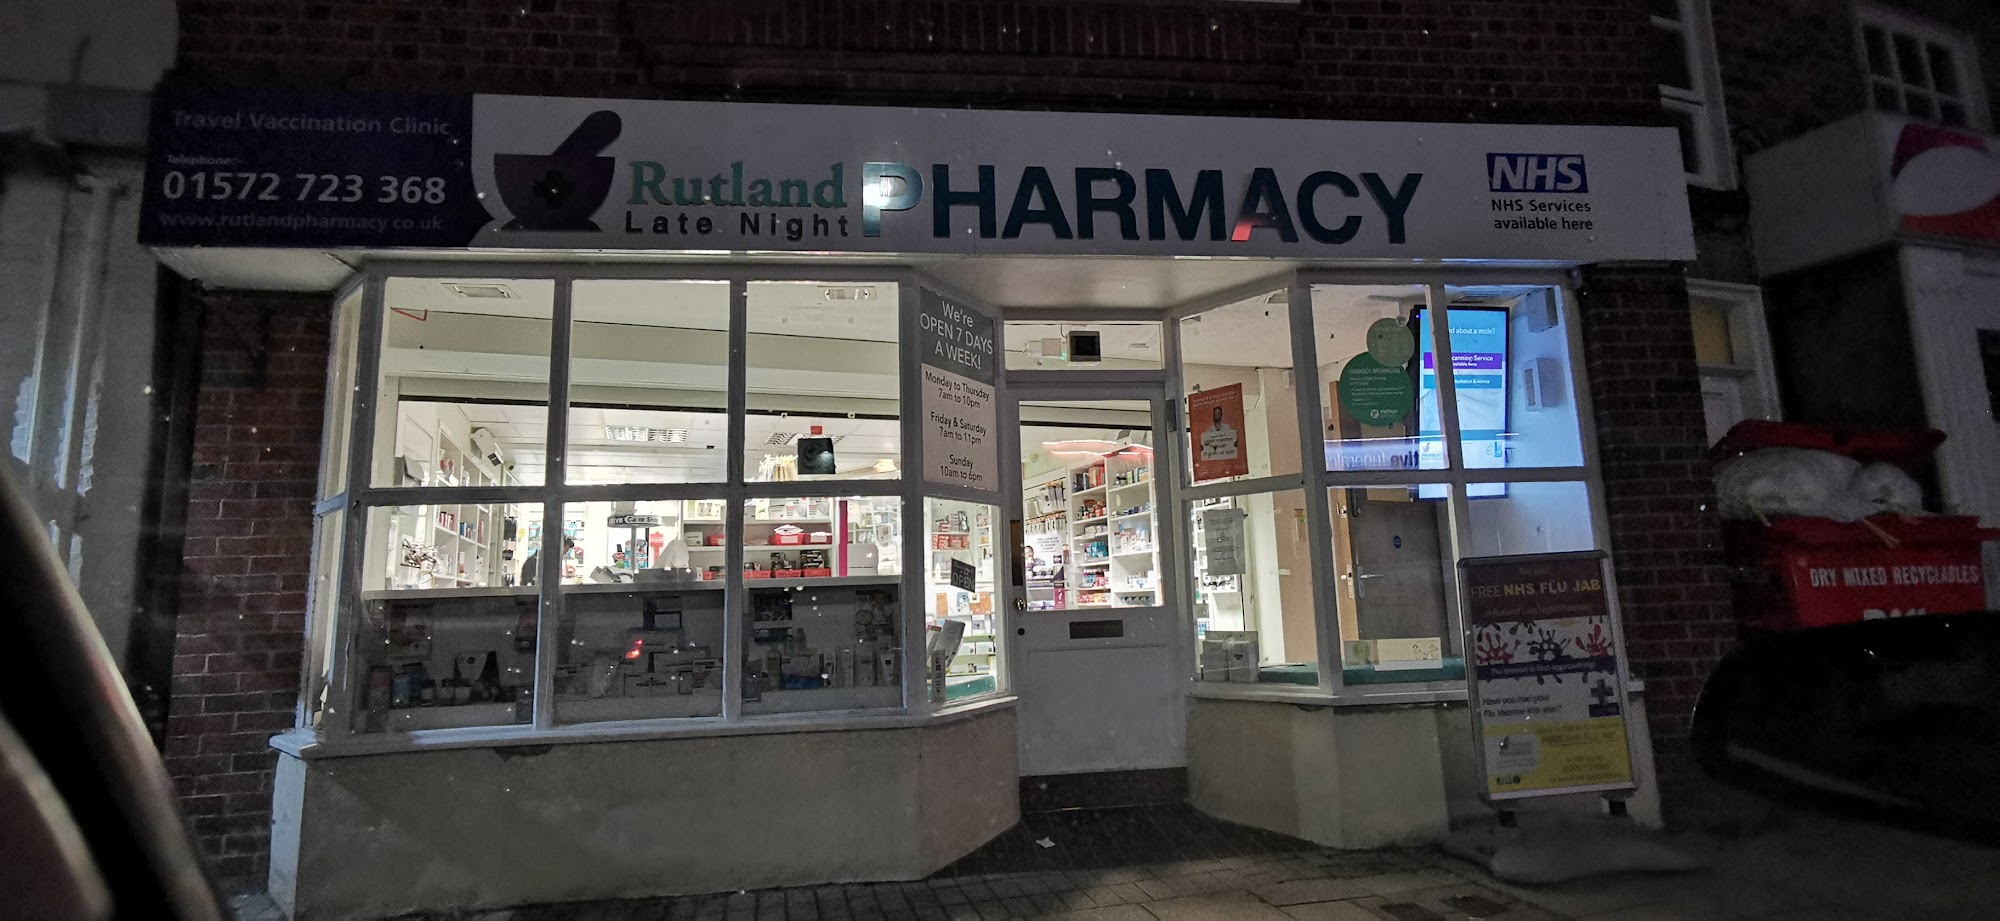 Rutland Late Night Pharmacy